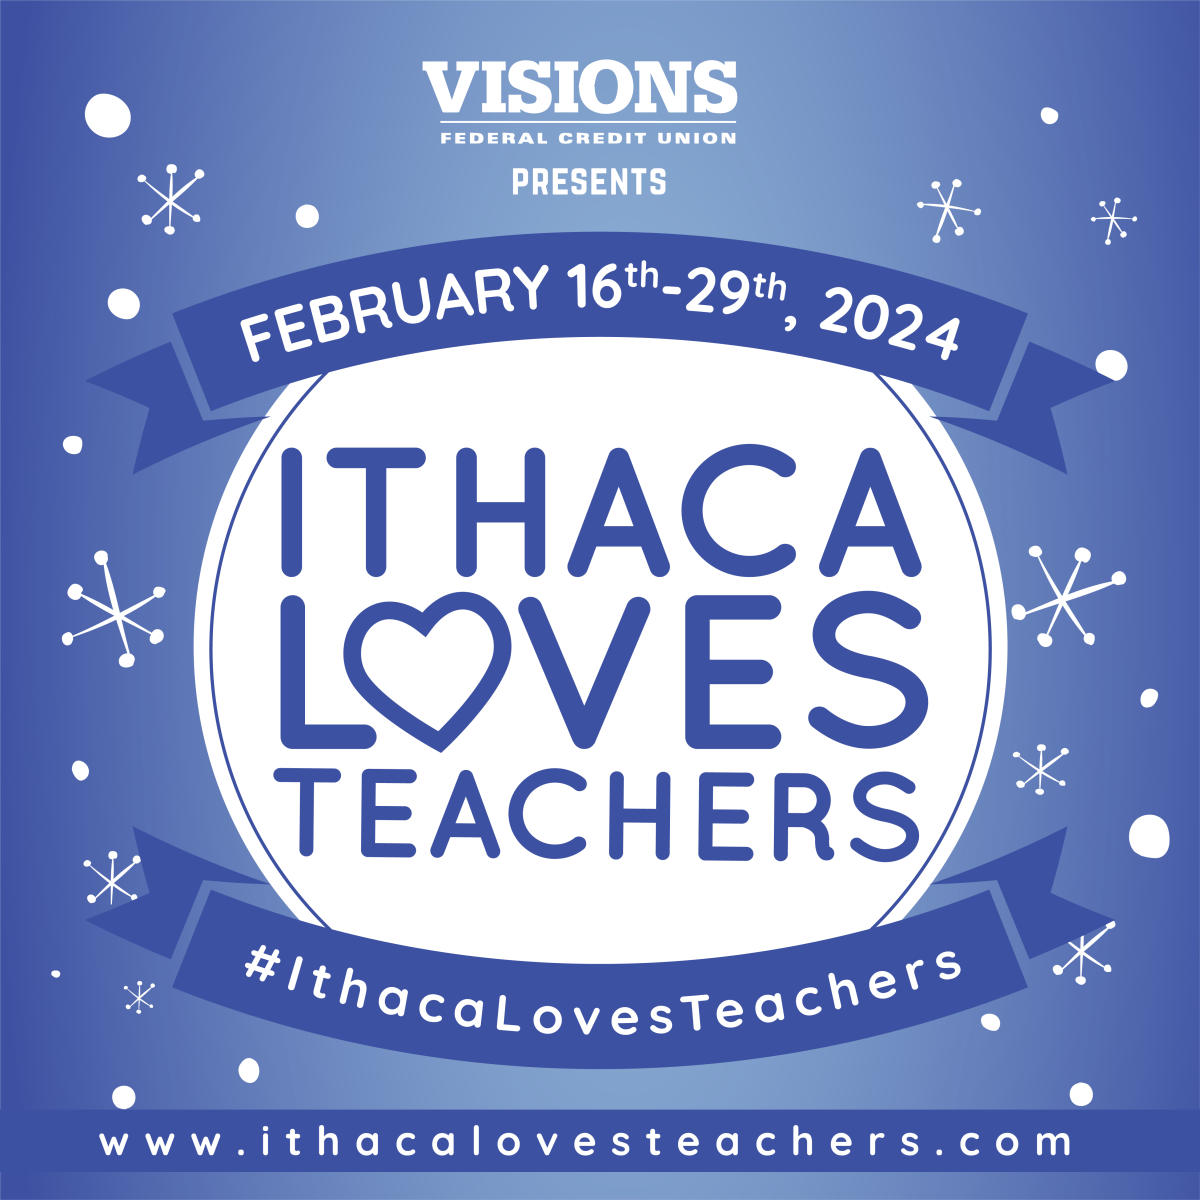 Ithaca Loves Teachers Ithaca, 14850